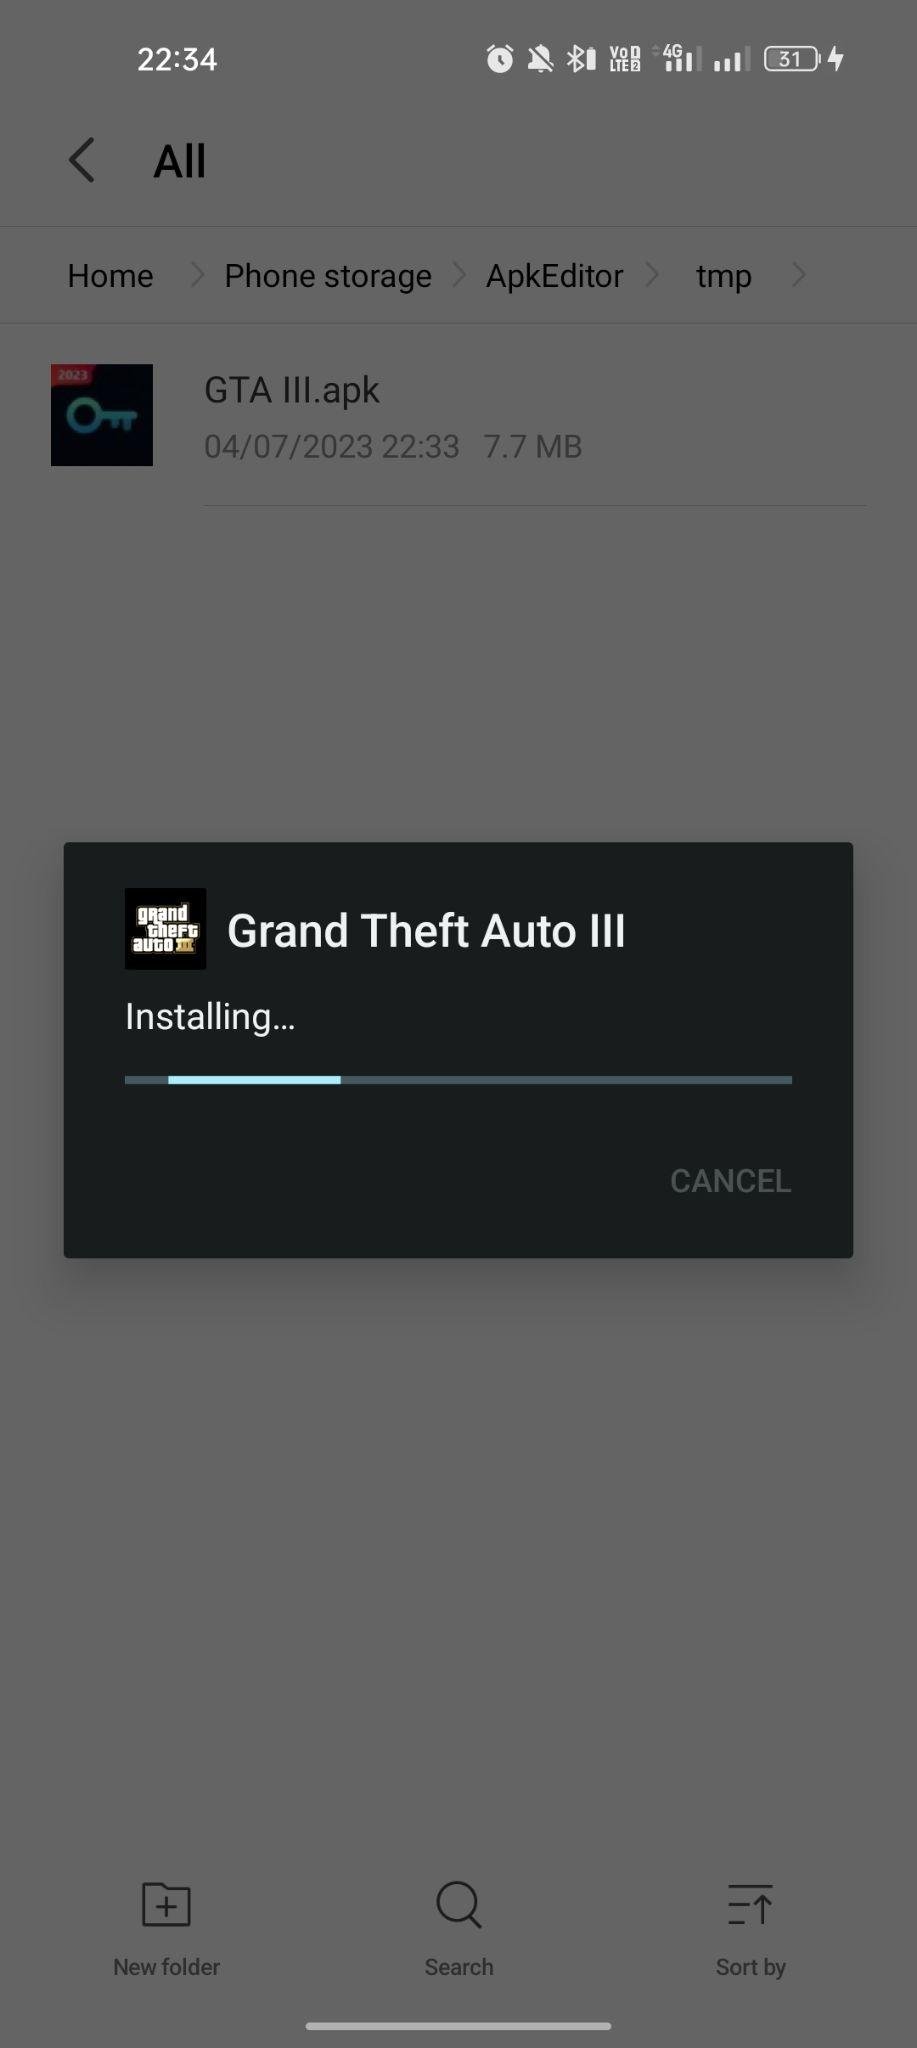 Grand Theft Auto III apk installing